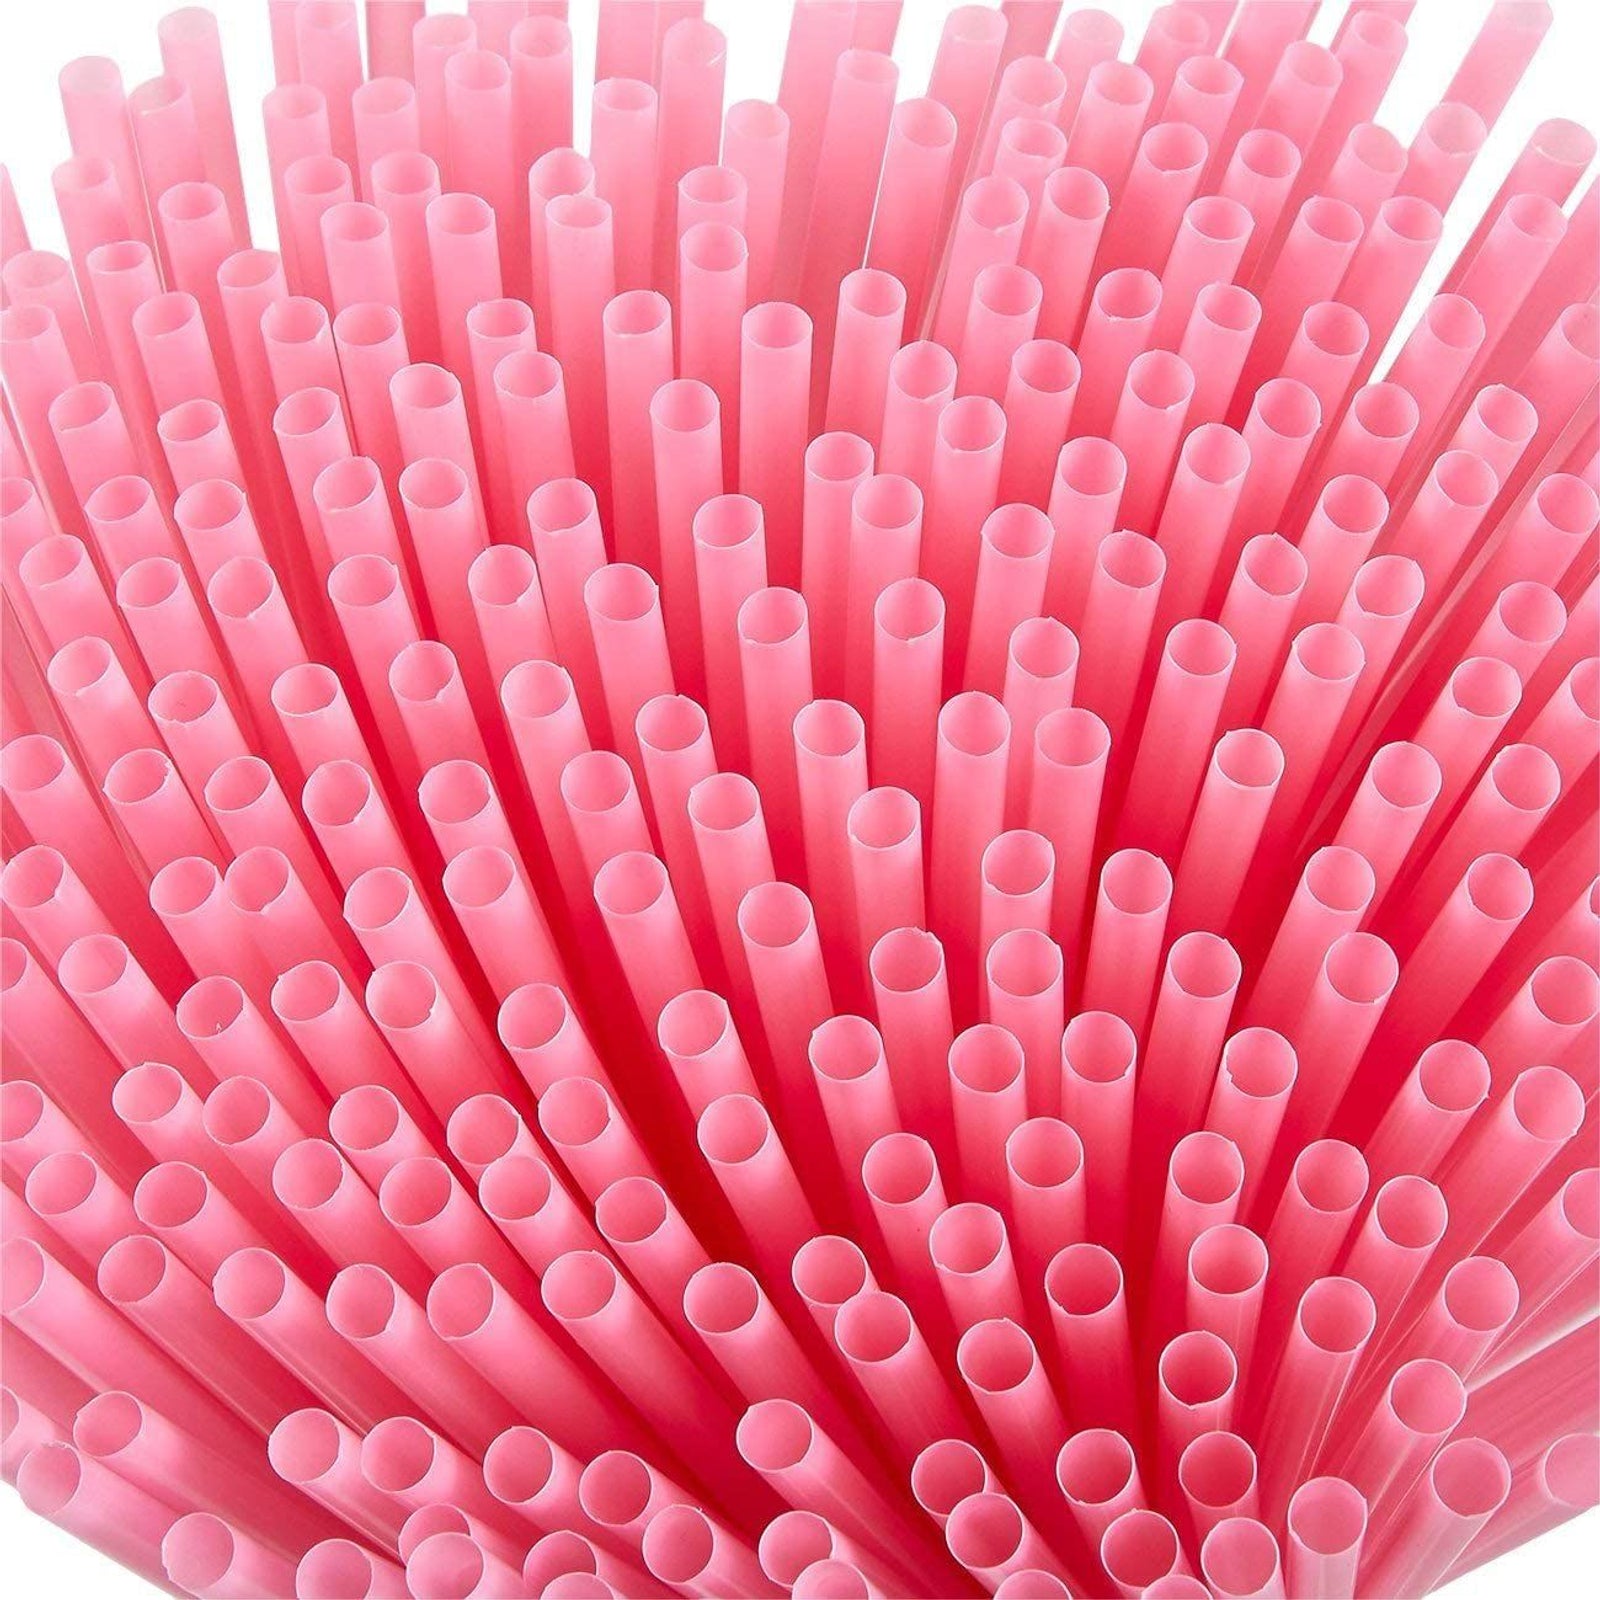 Regular plastic straws - 100% real plastic